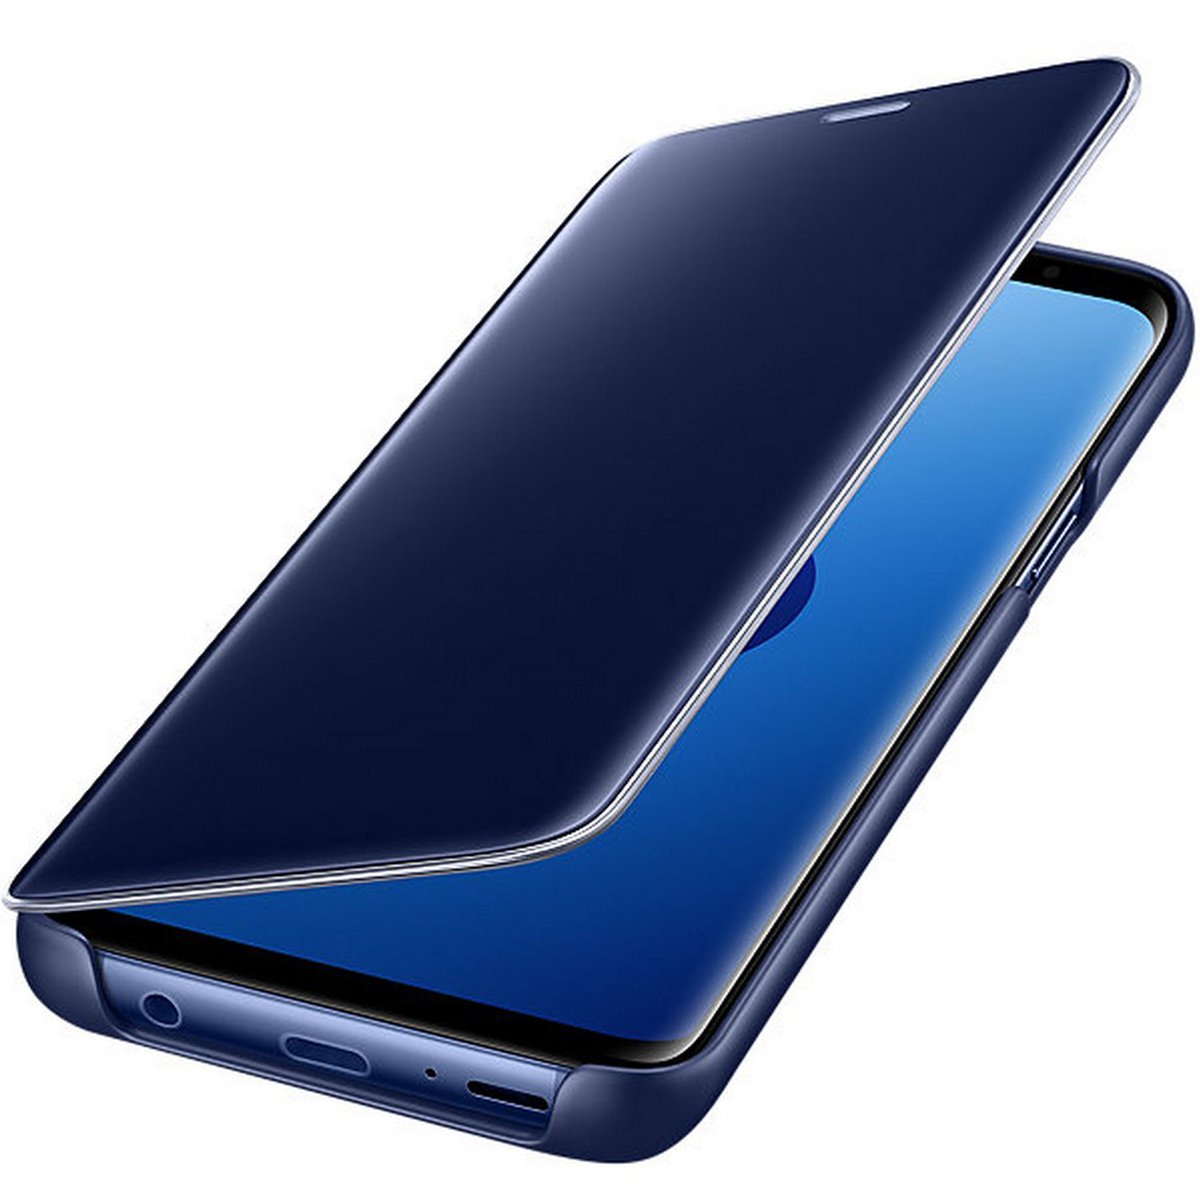 Samsung Galaxy S9 Clear View Standing Cover Blue EF-ZG960CLEGWW